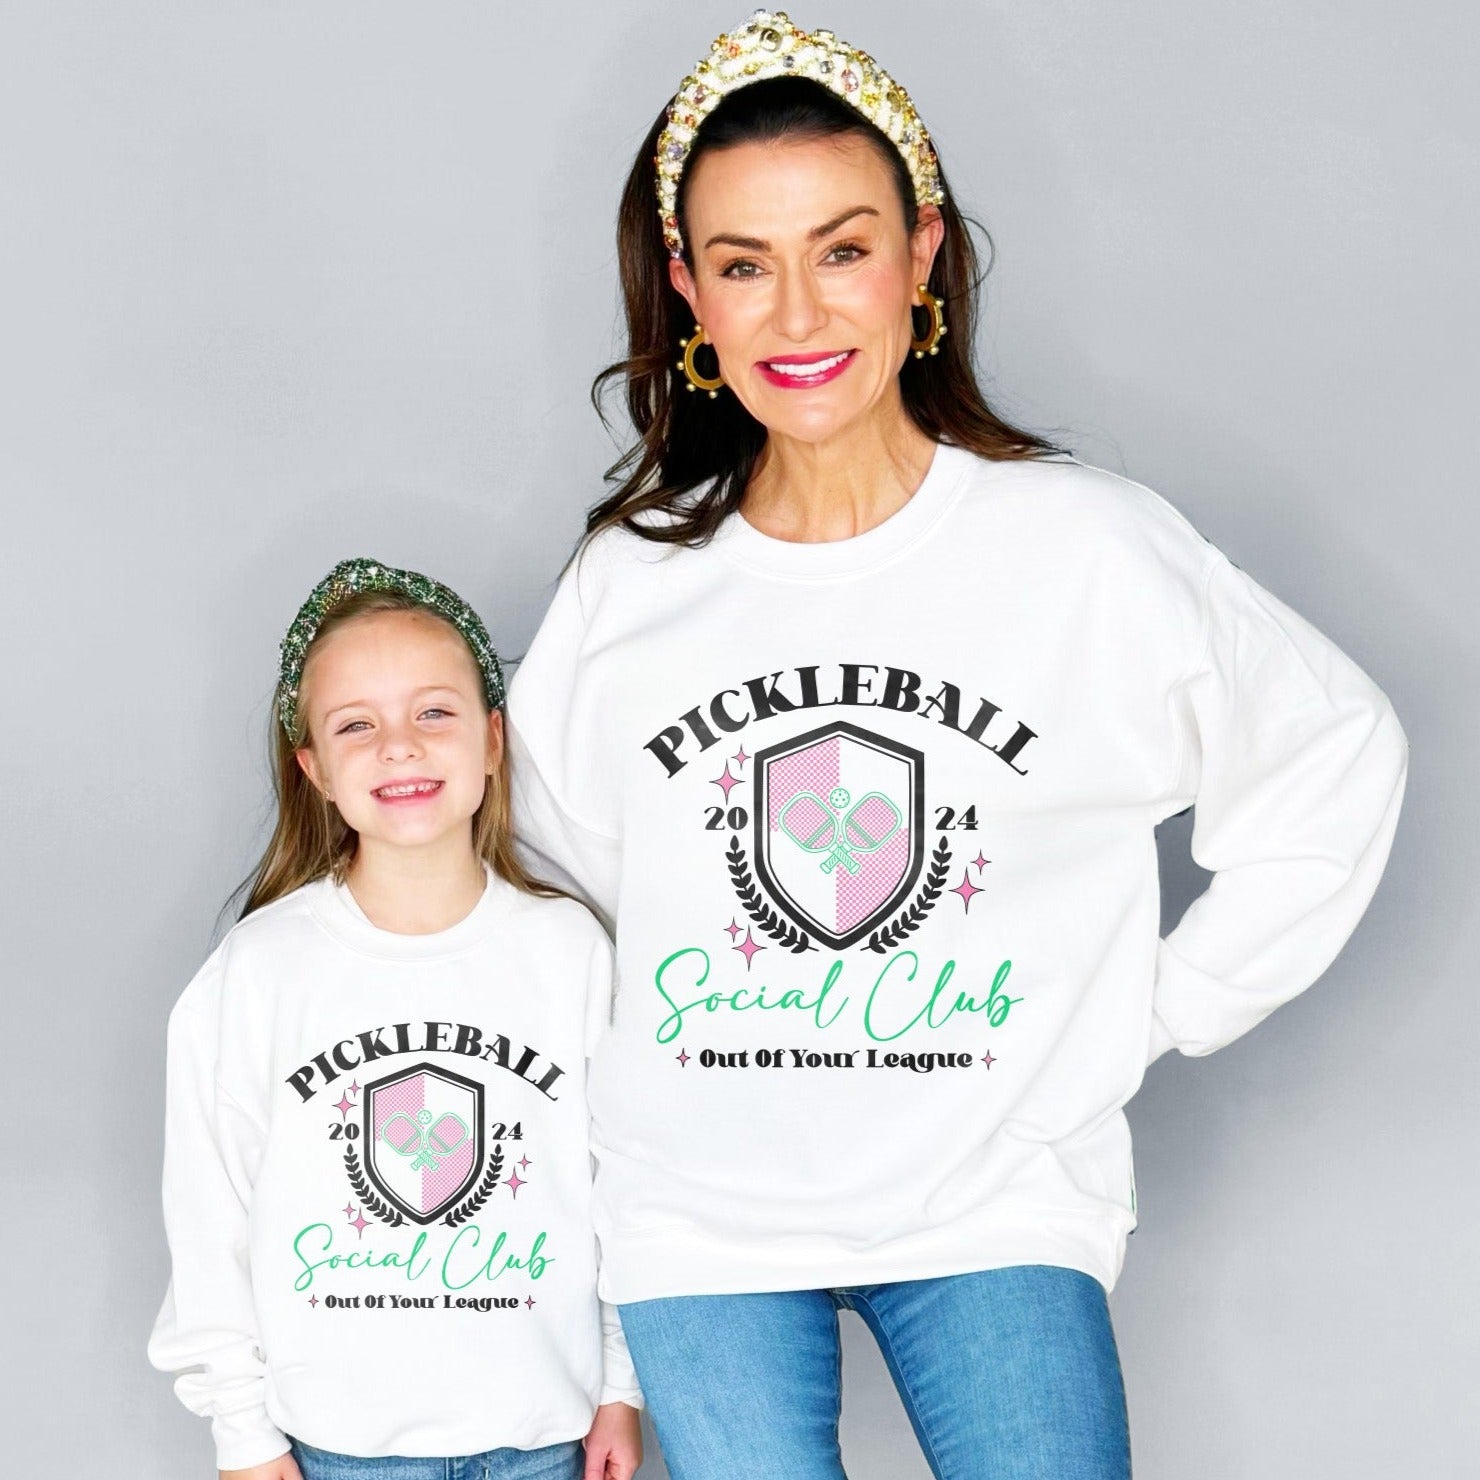 Pickleball Social Club Youth and Adult Sweatshirt